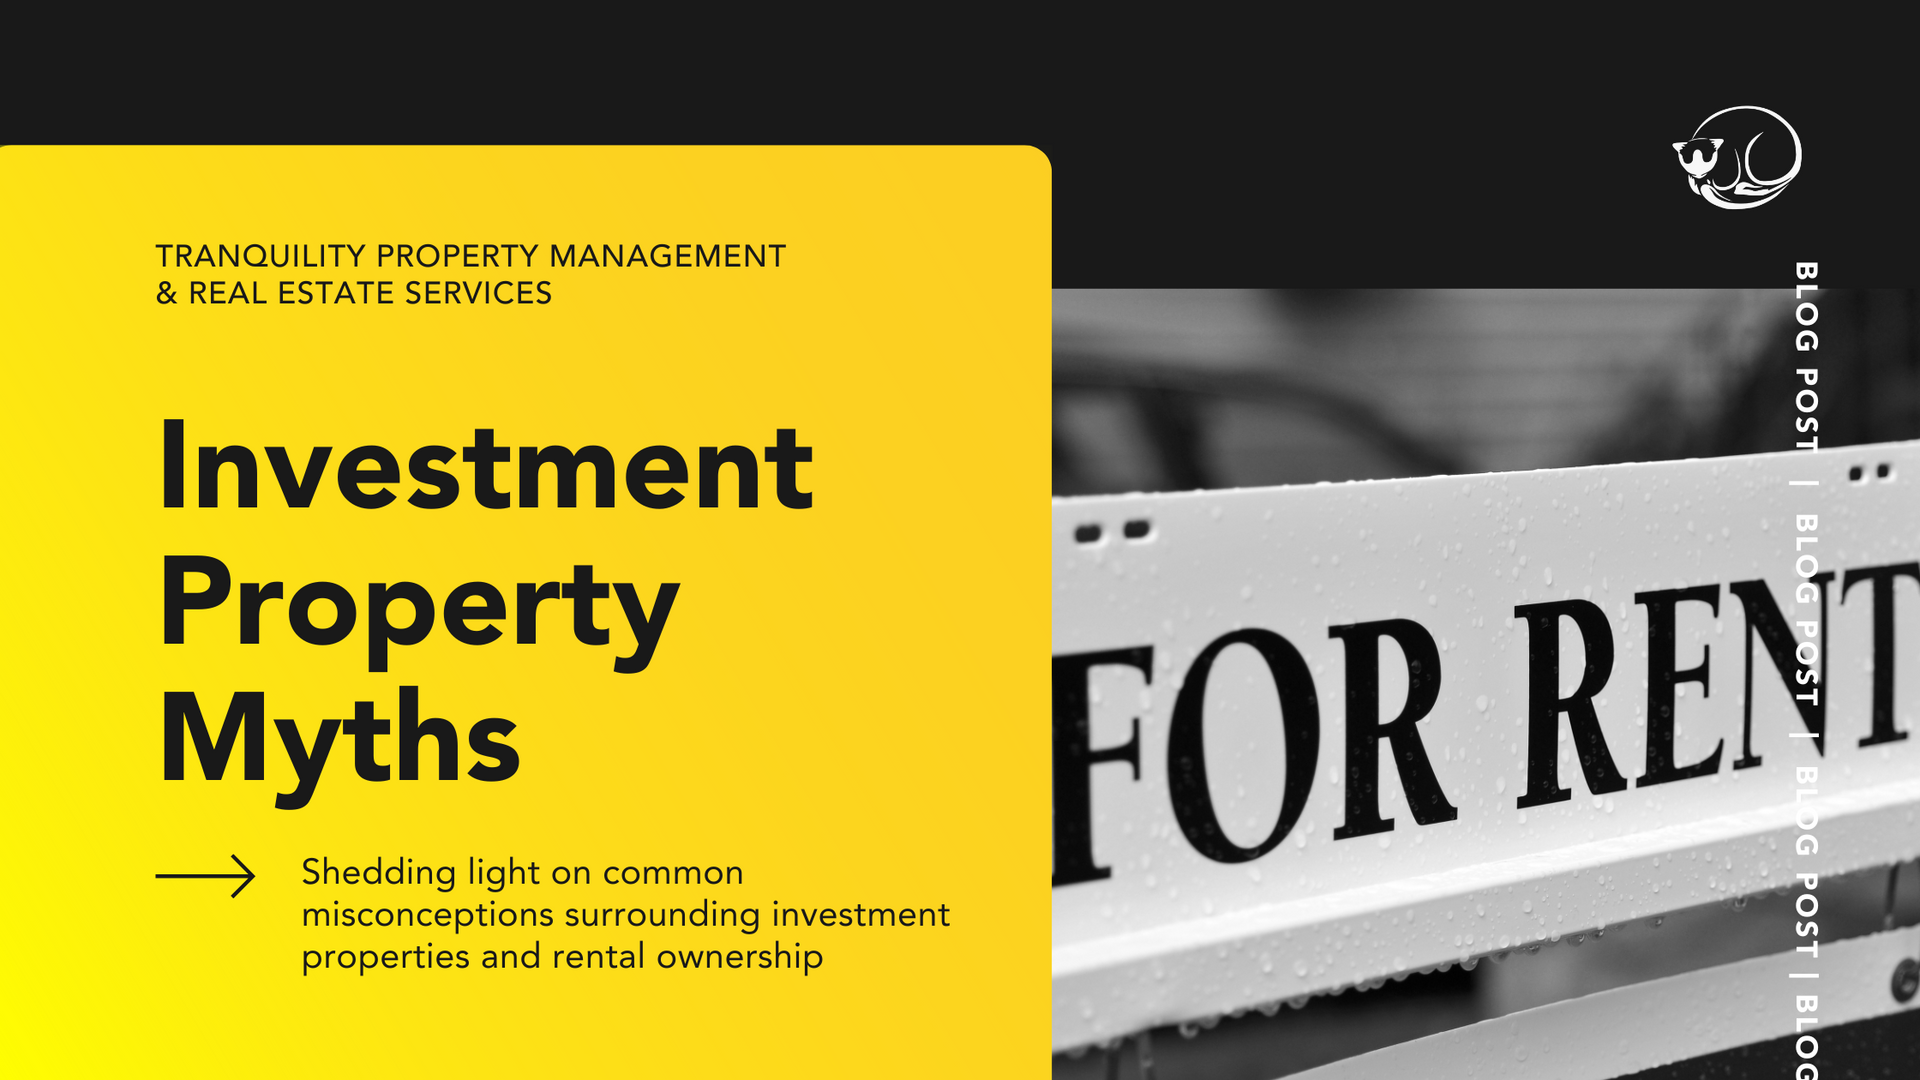 Investment Property Myhts blog header image